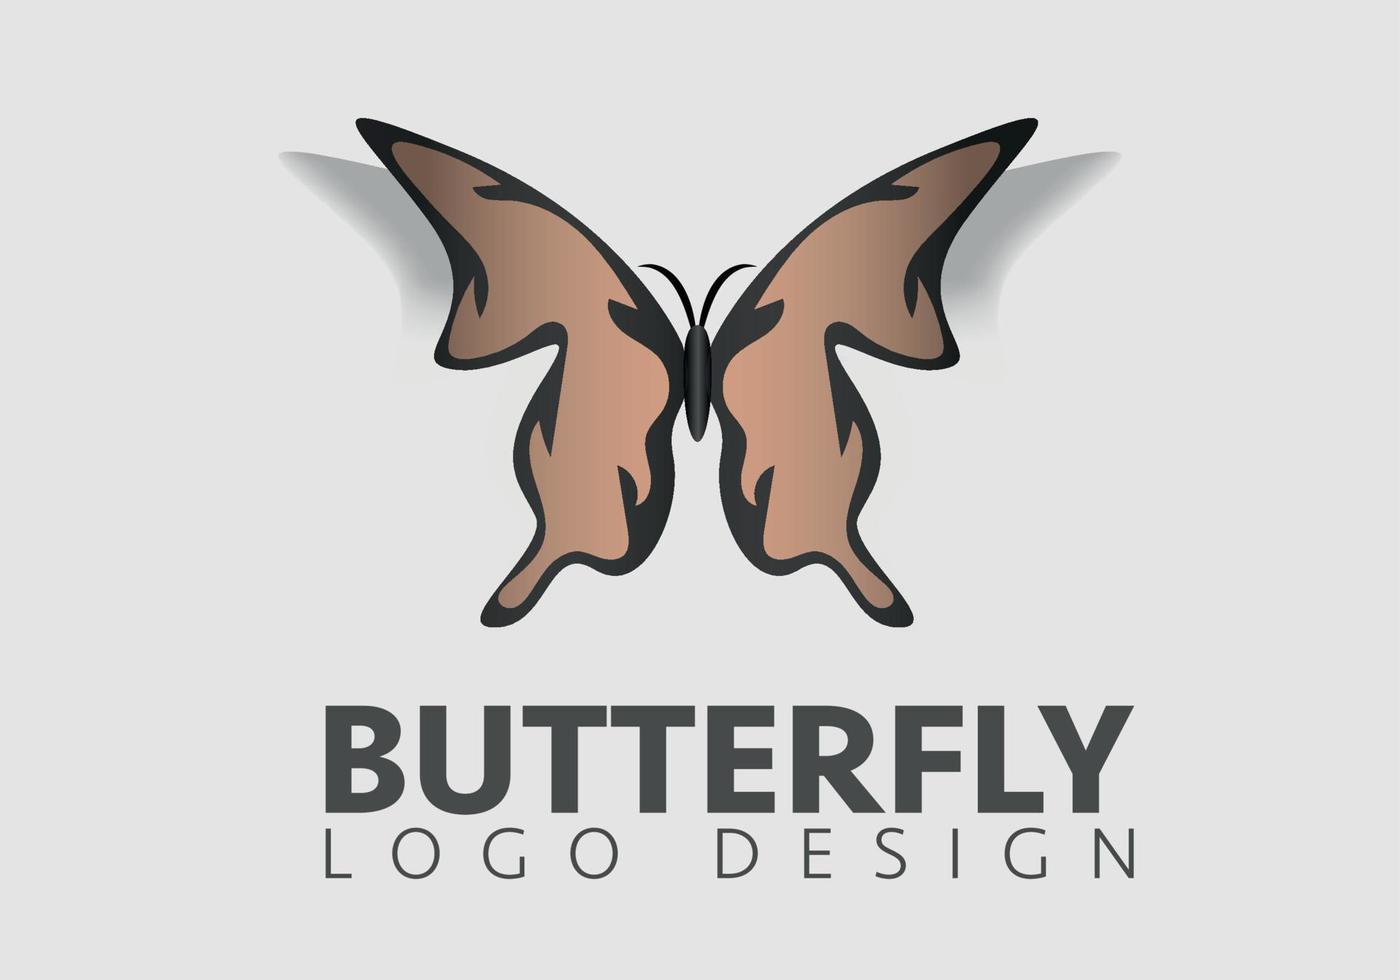 butterfly icon logo vector design template